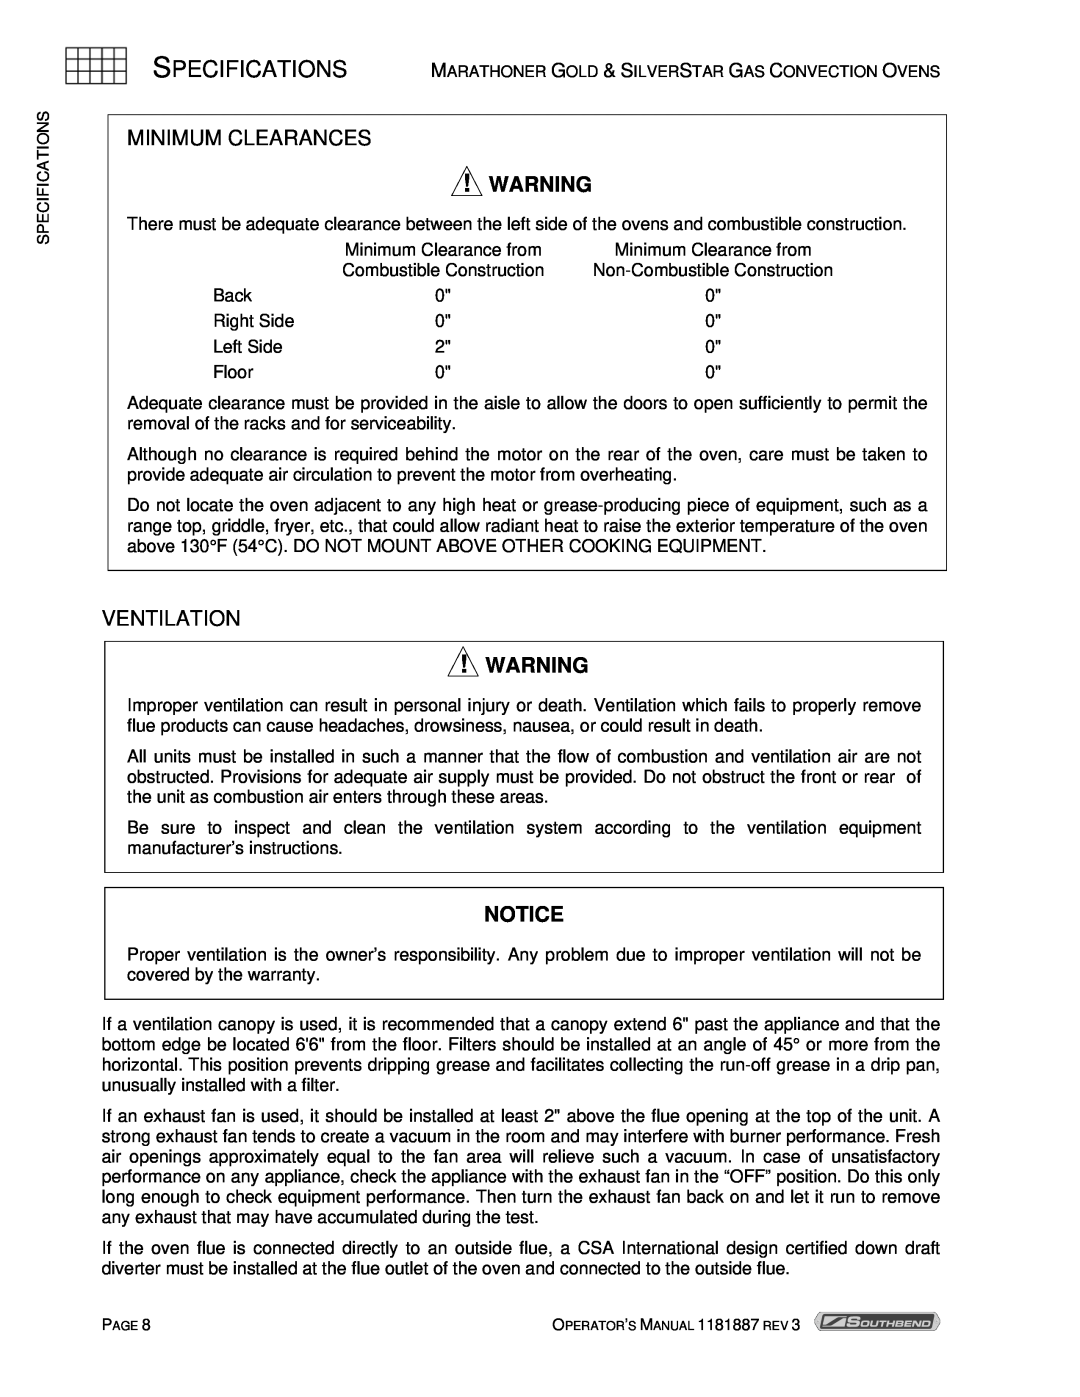 Southbend Marathoner manual Minimum Clearances, Ventilation, Specifications 